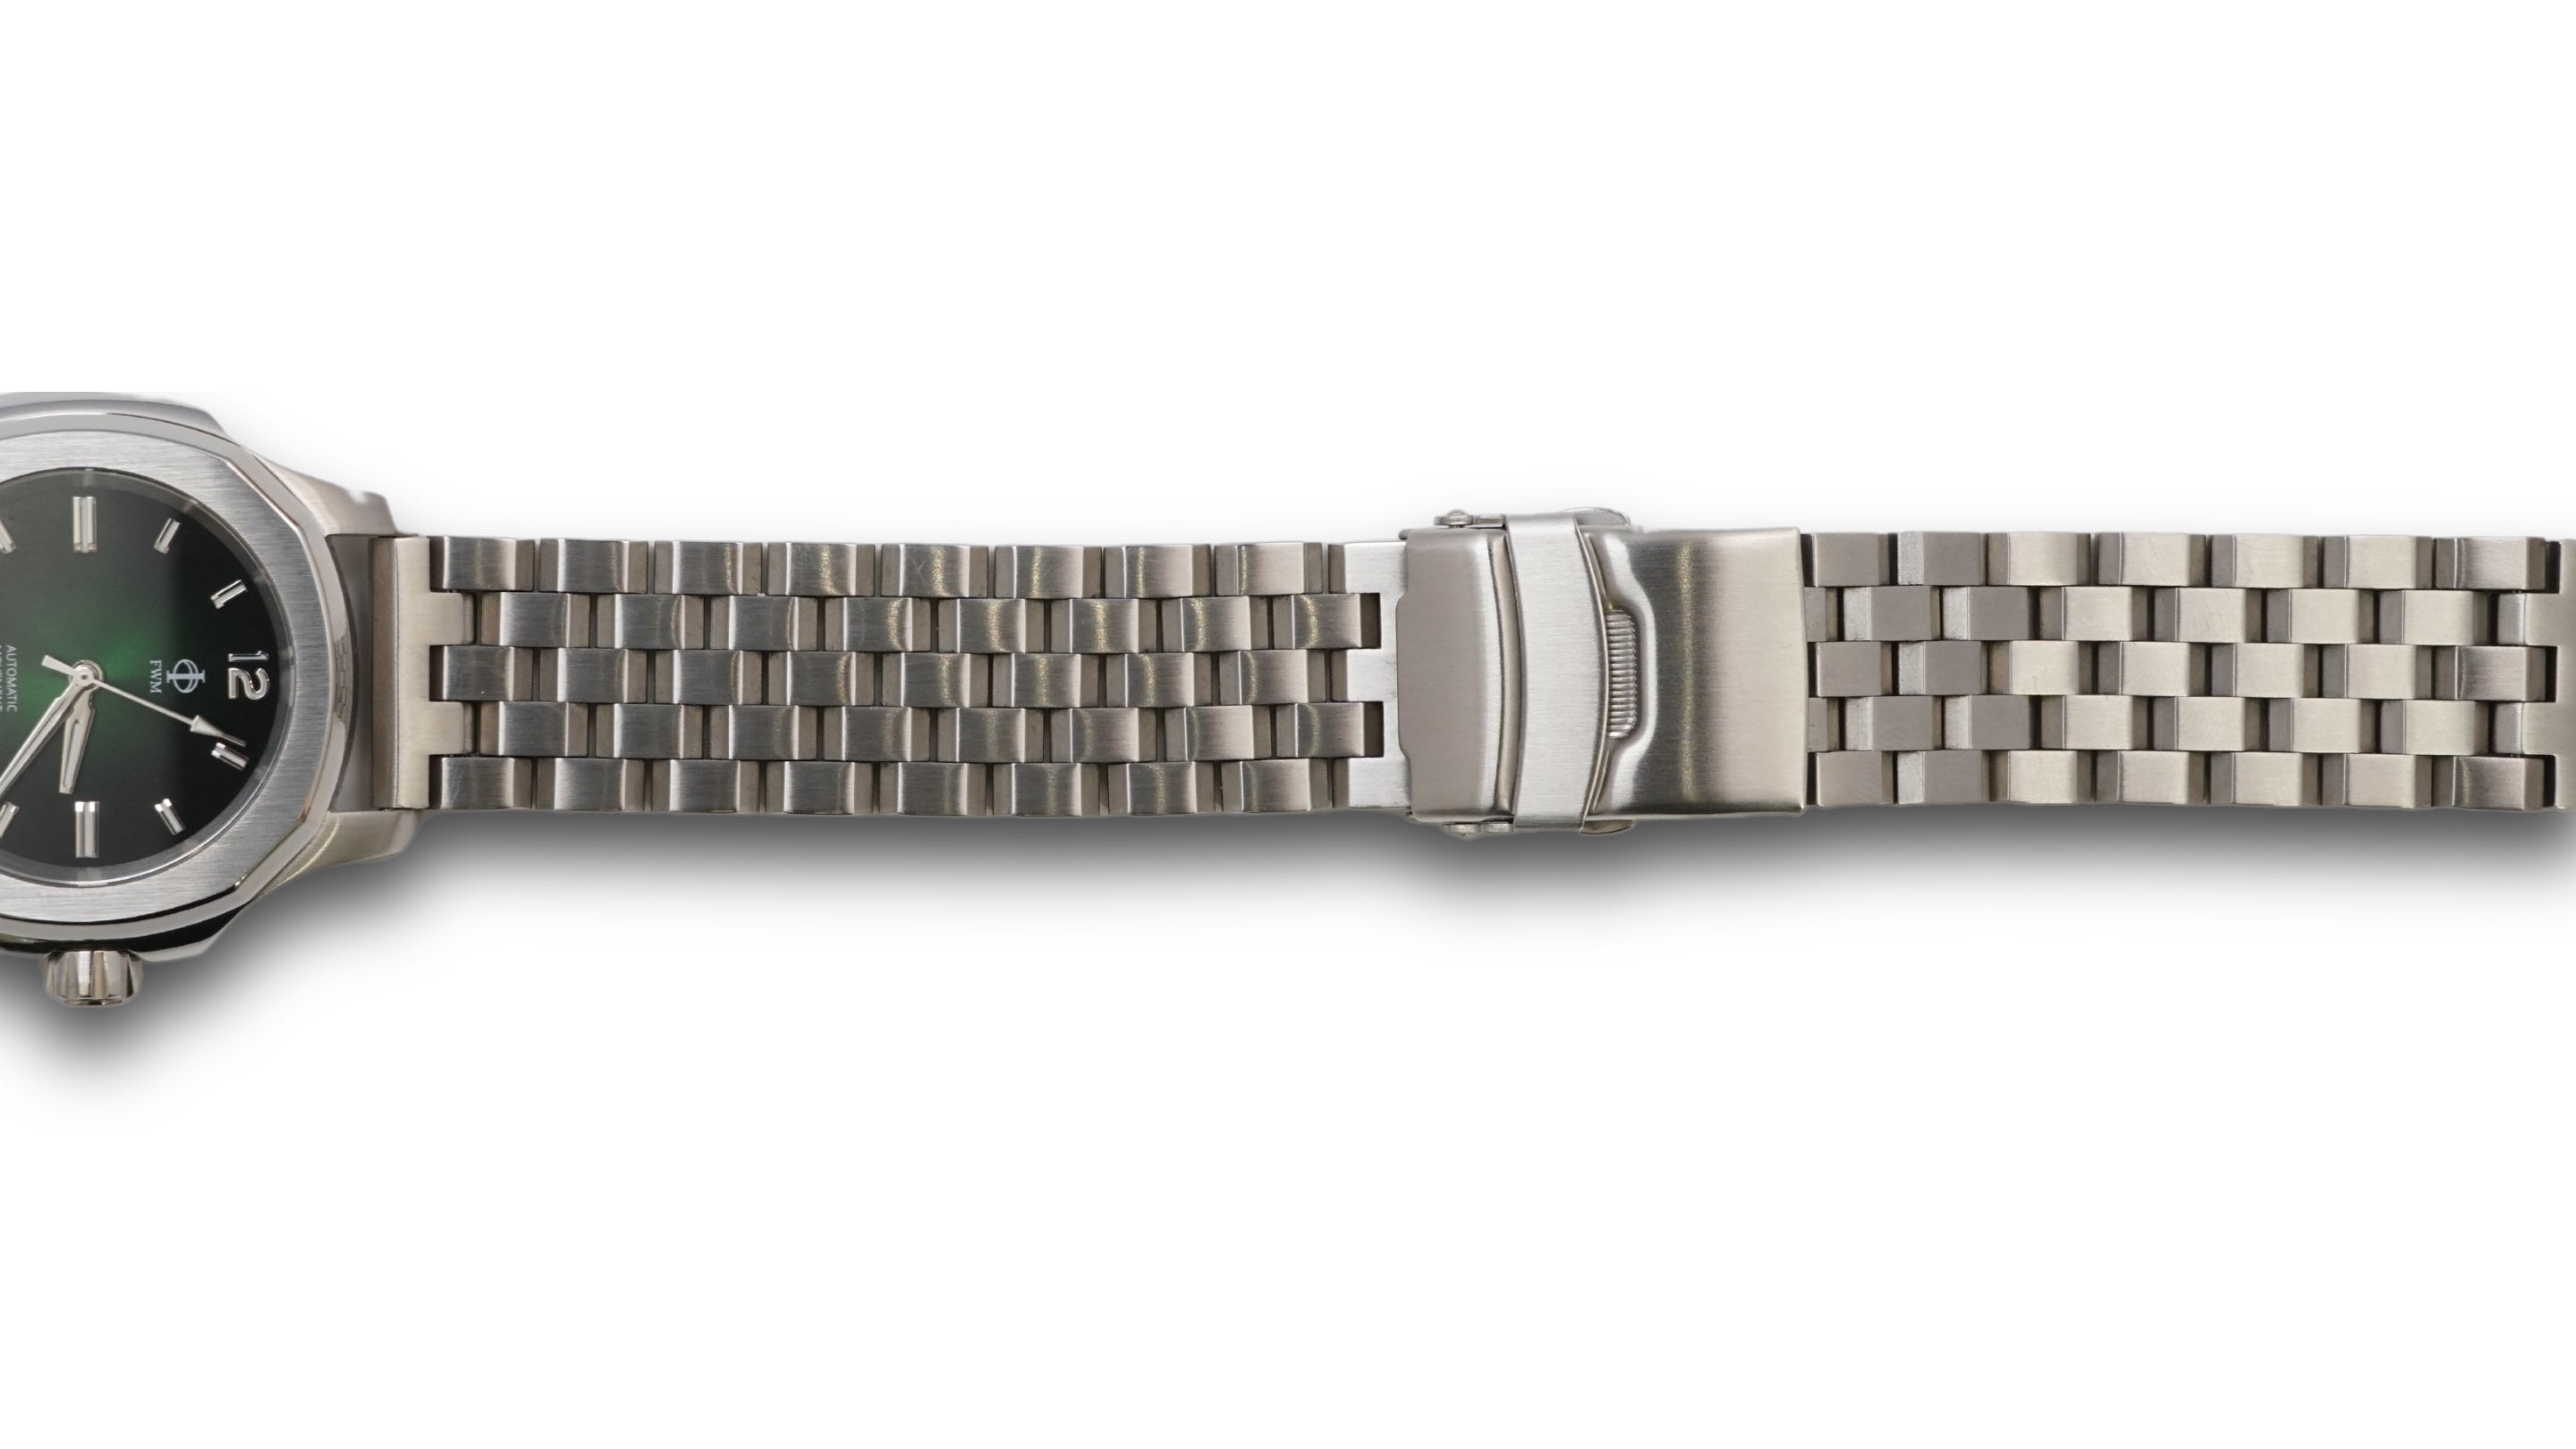 Stainless steel bracelet kit with tools (Diver III, Mayfair) - Engineered links